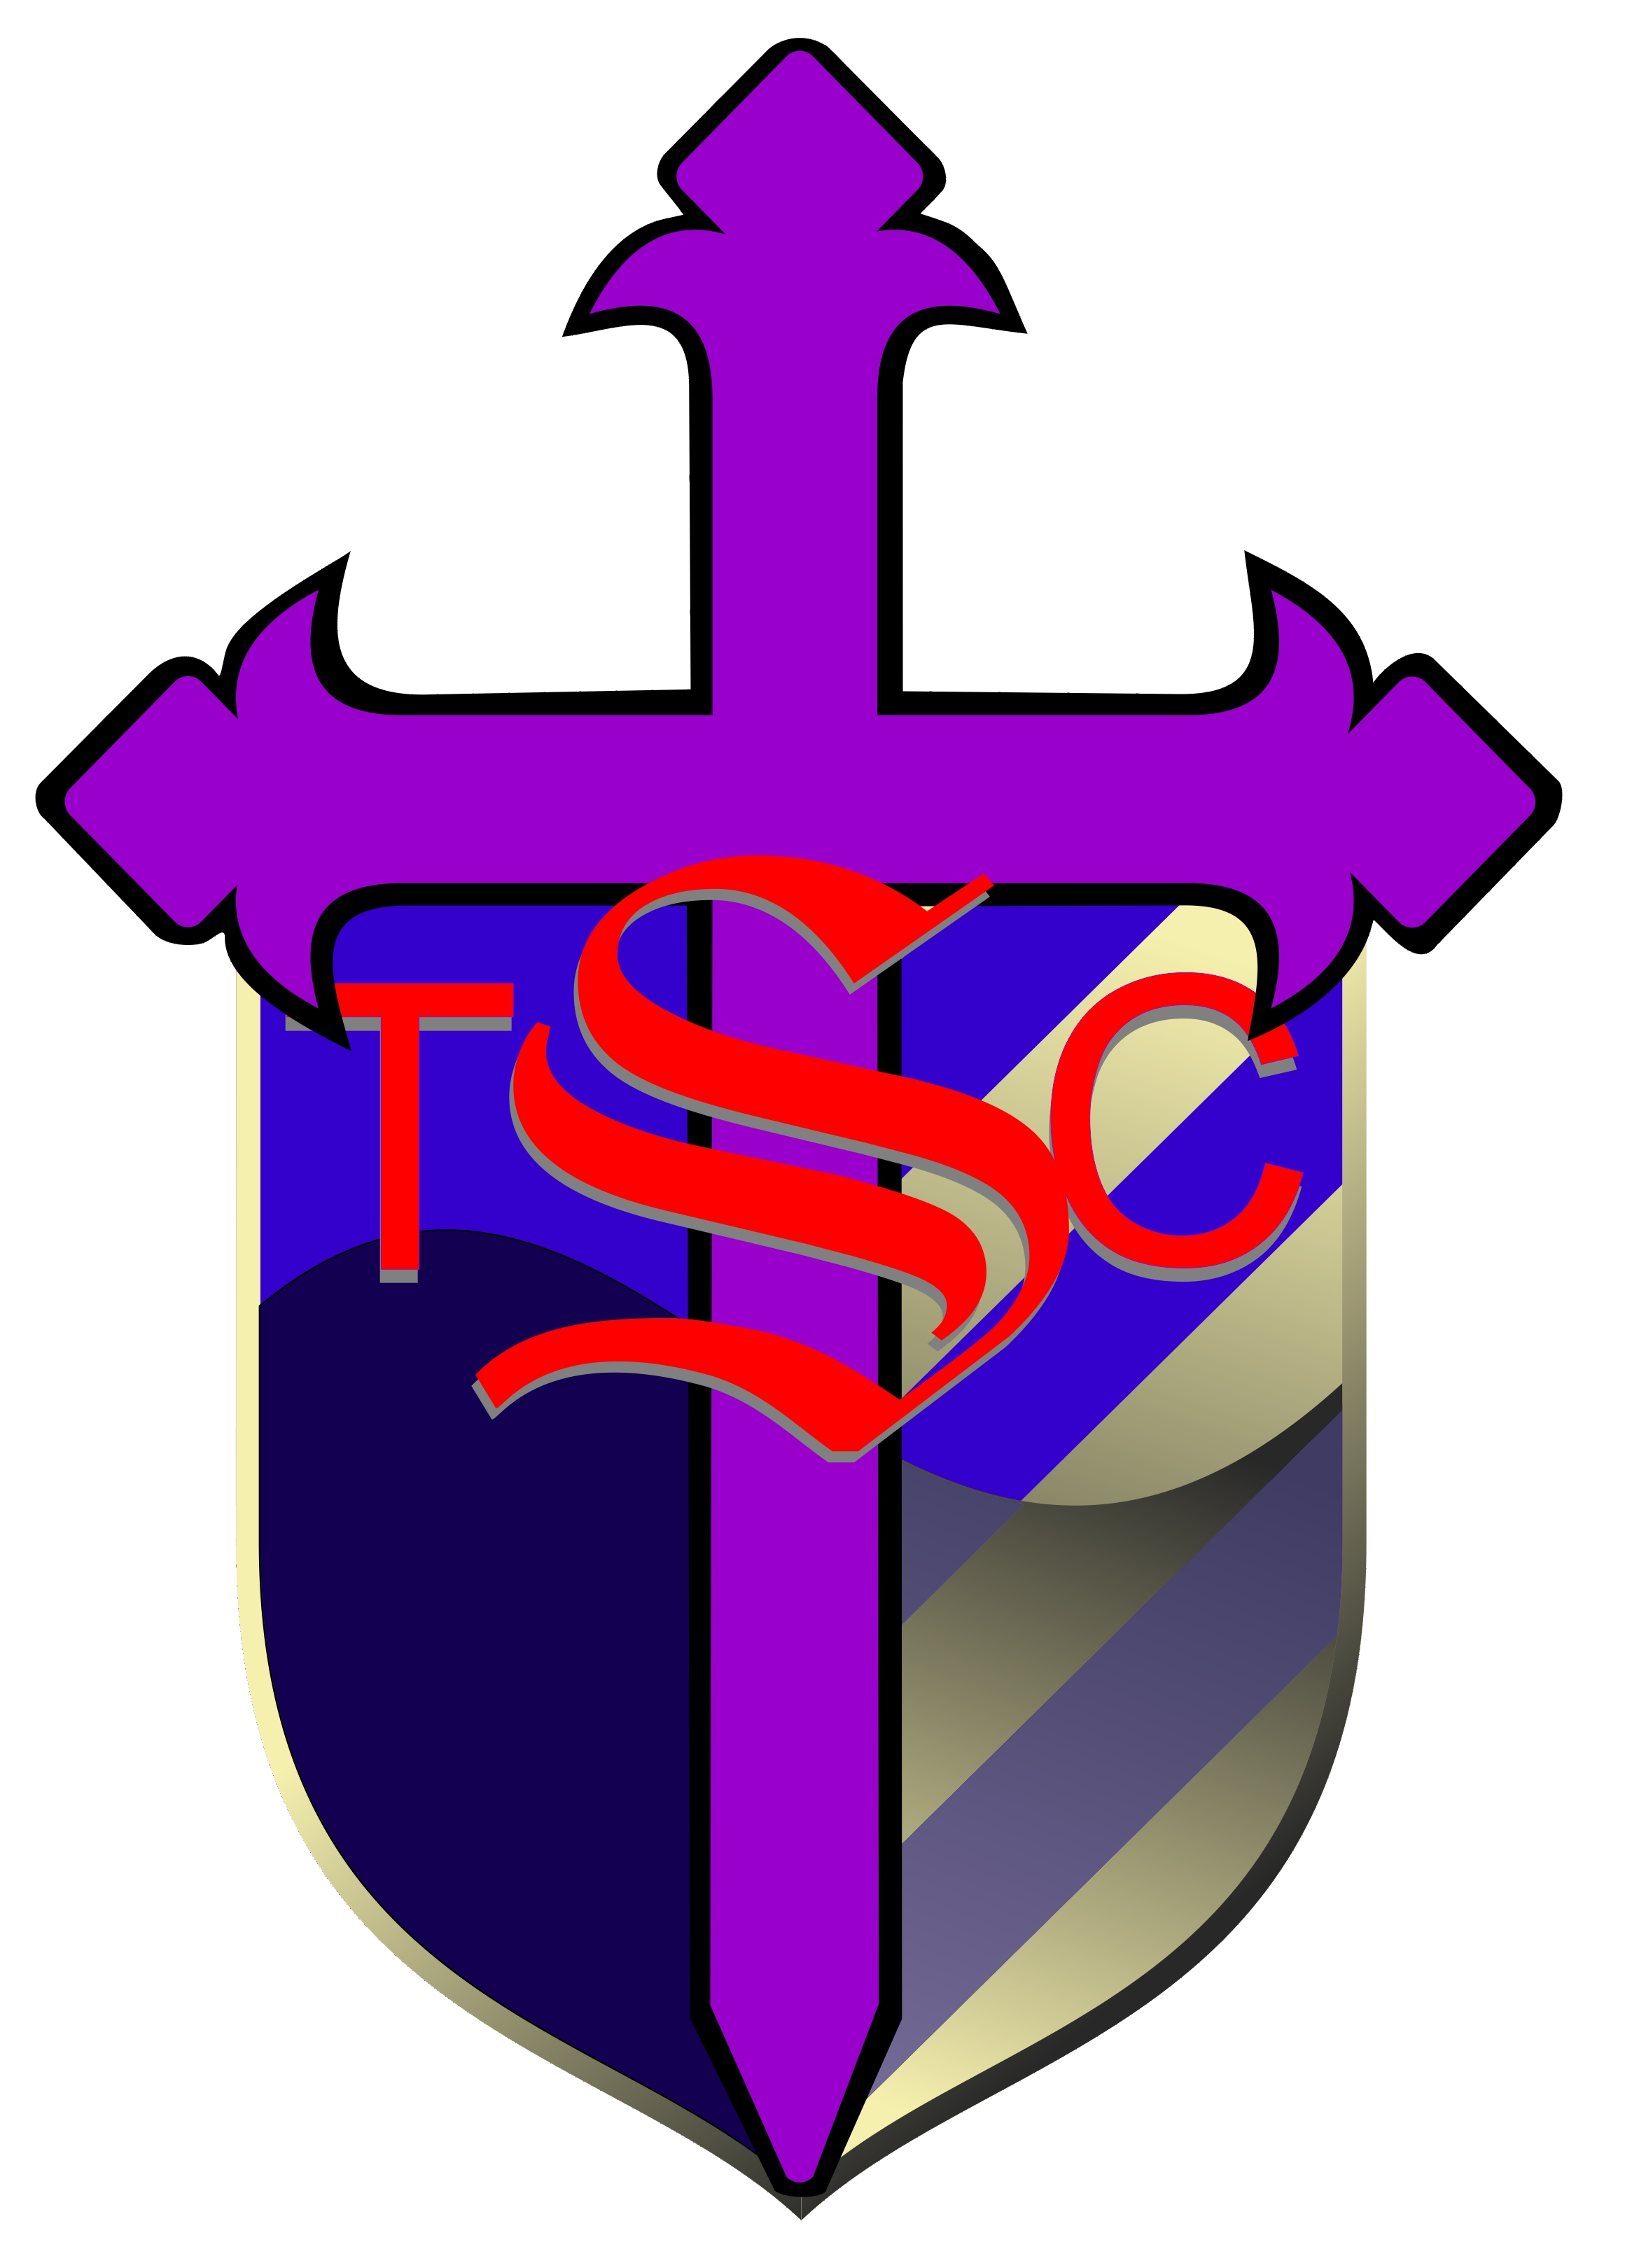 The Shepherd's Cross Logo